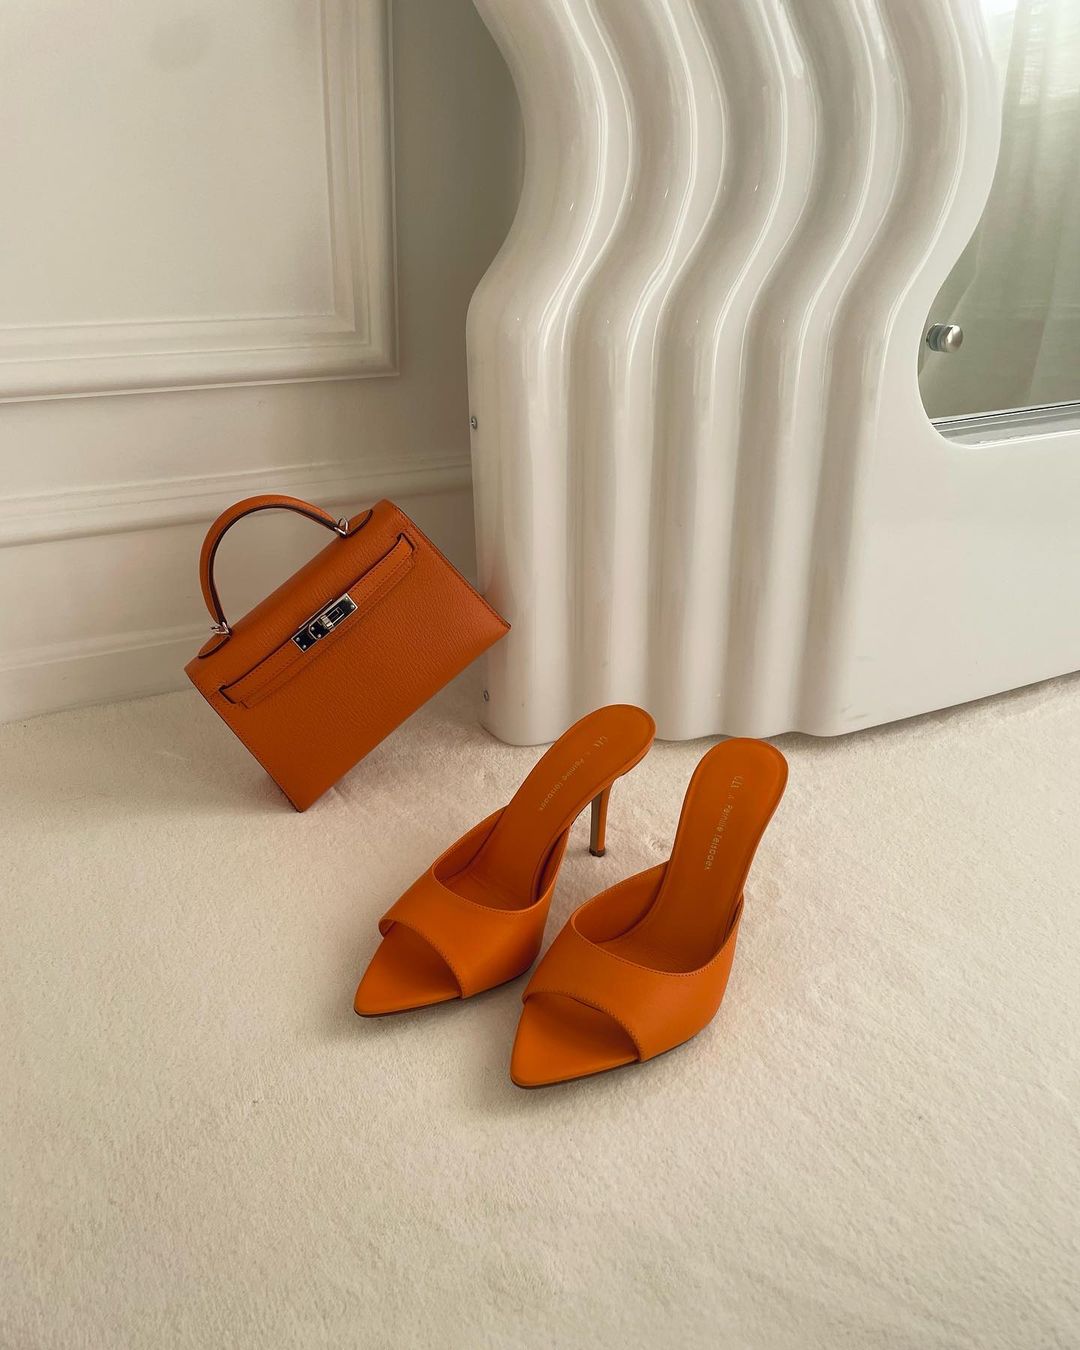 Sandalias naranjas y bolso de Hermès